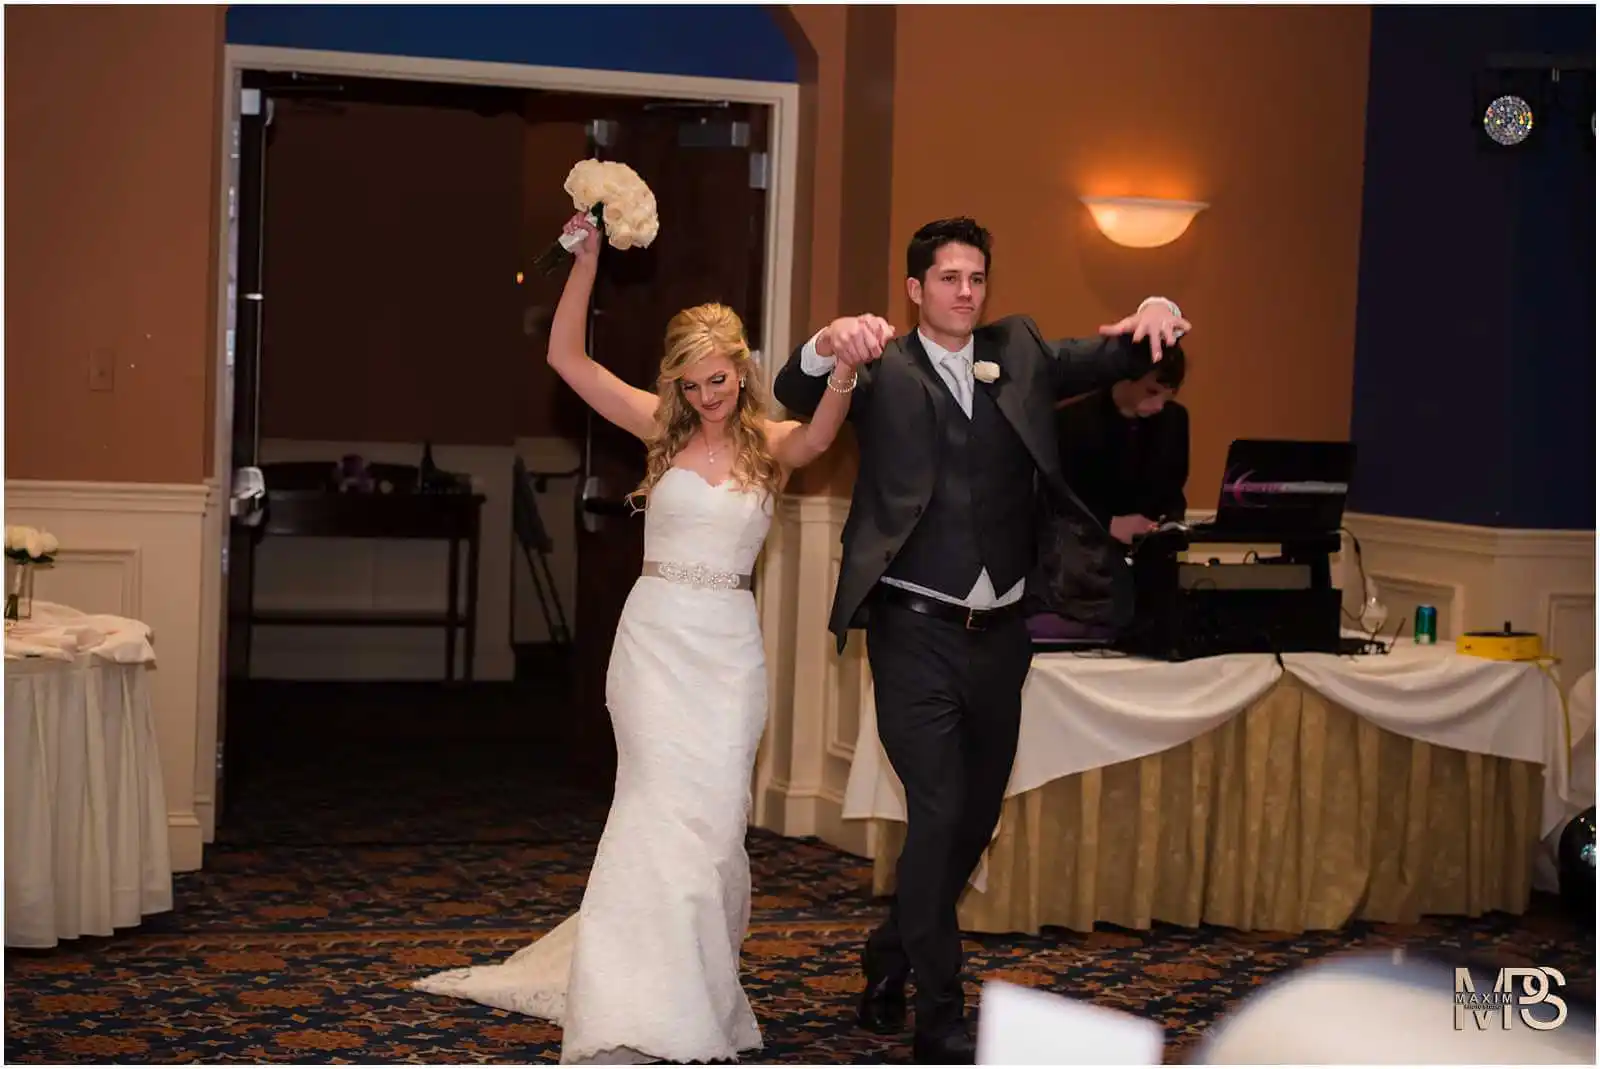 Joyful newlyweds dancing into their reception in Covington, KY.